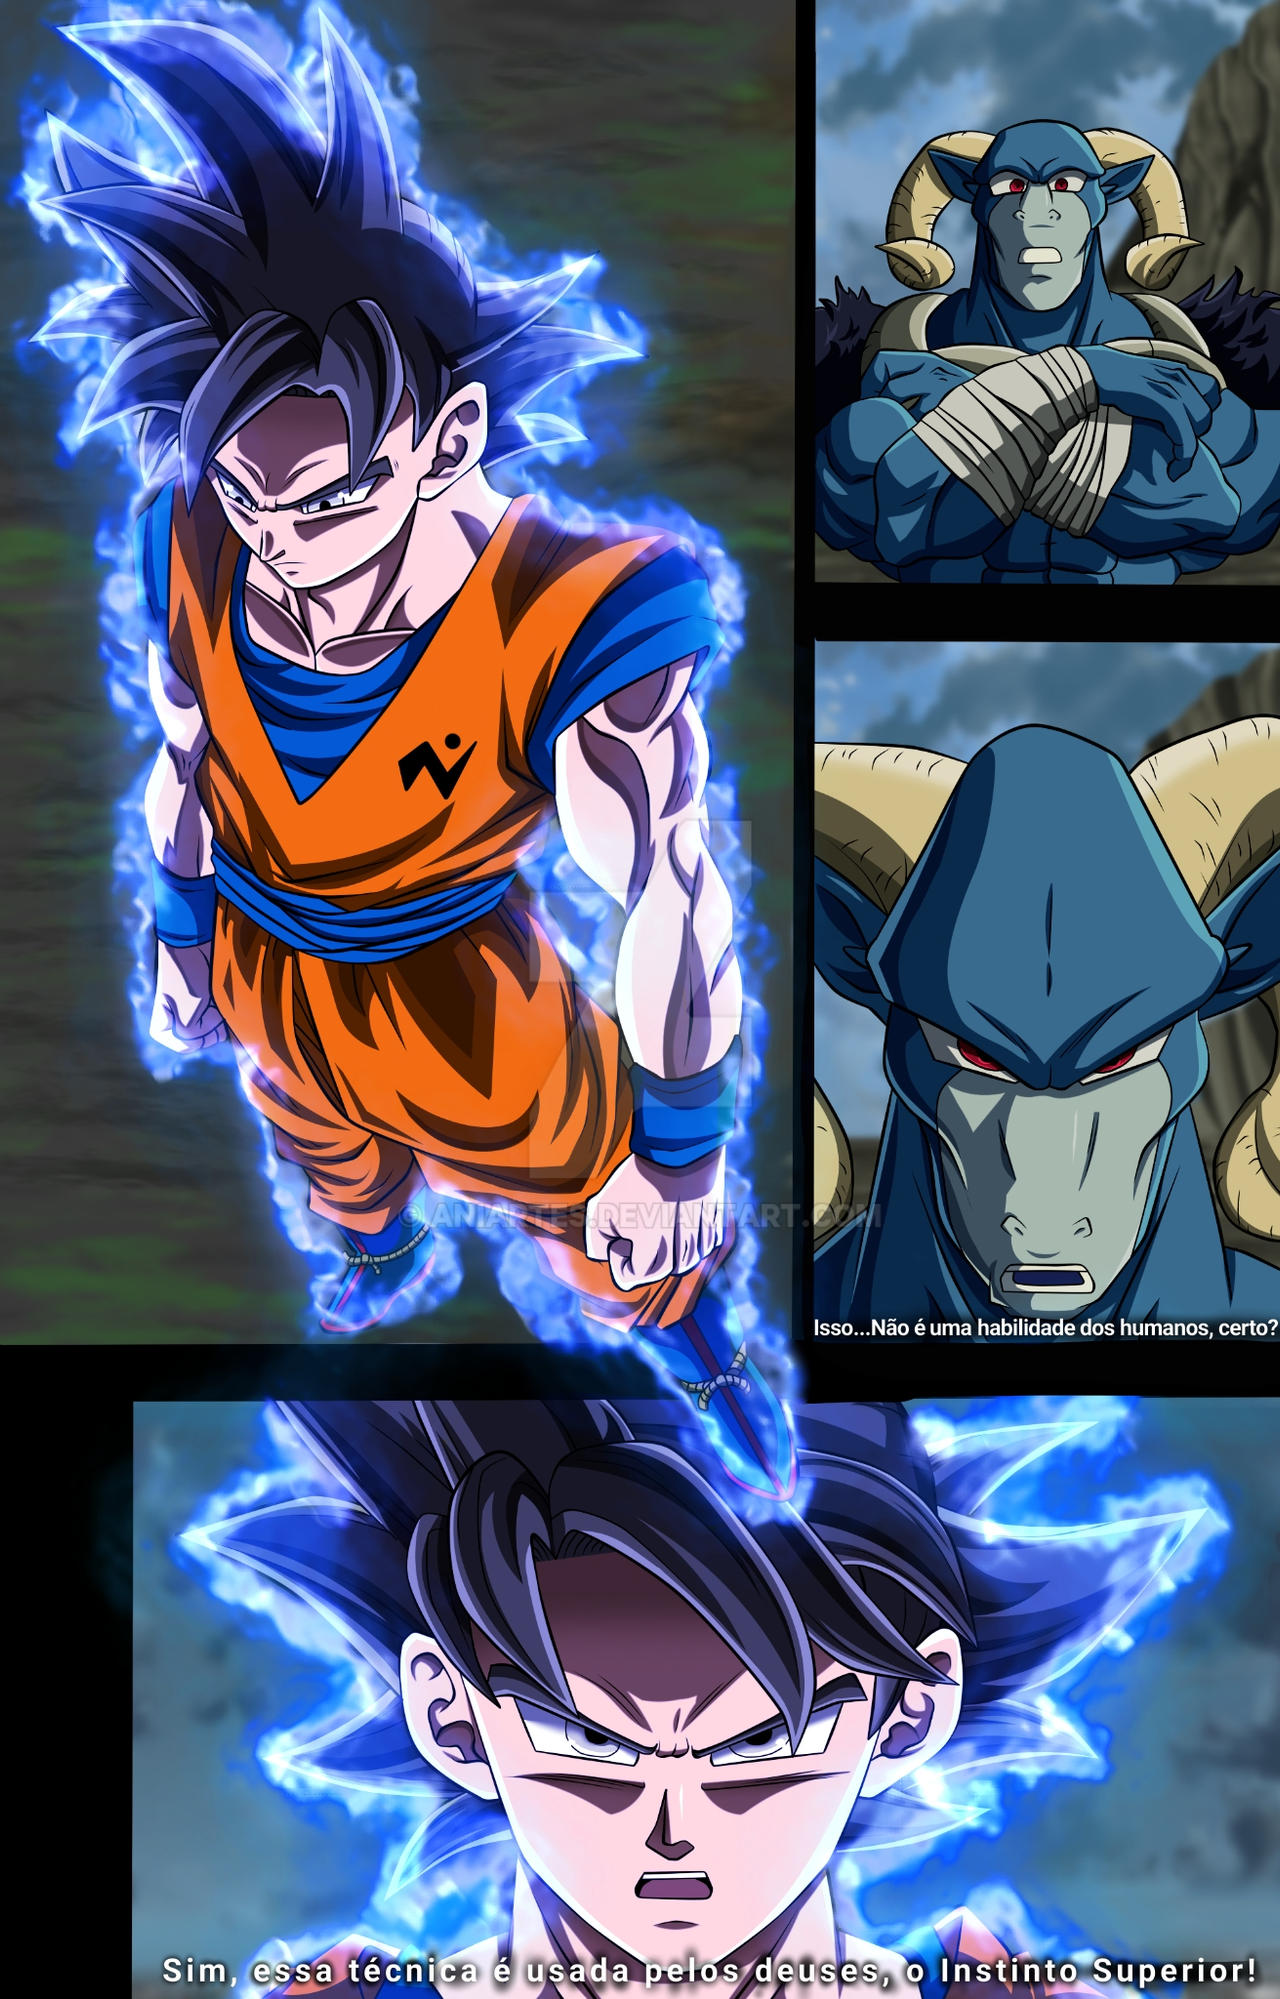 Goku instinto superior by noobmanek on DeviantArt